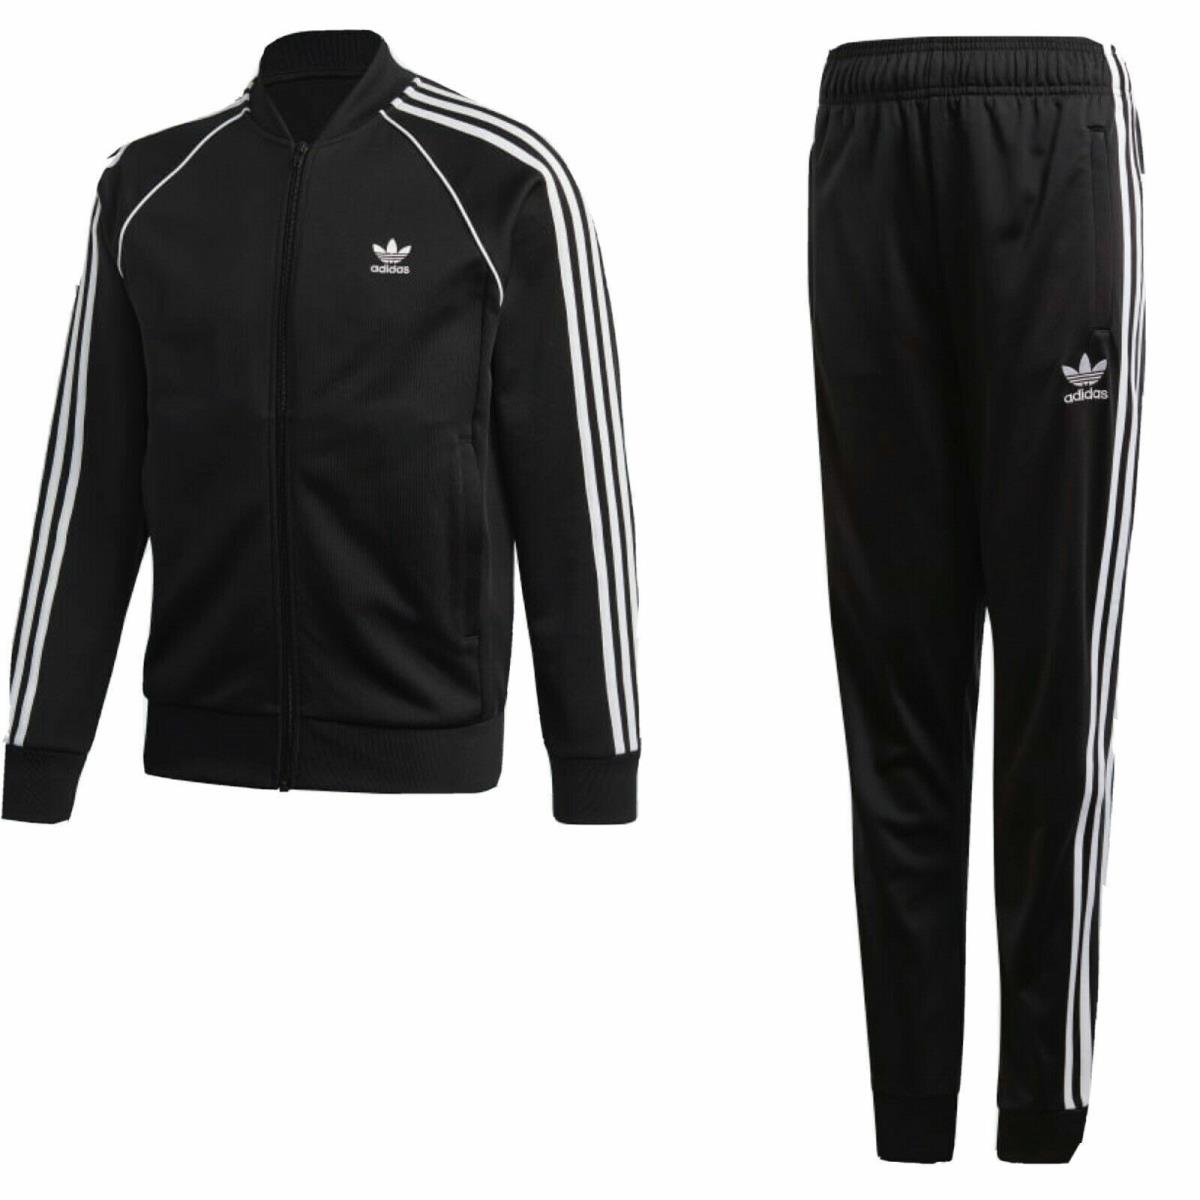 Adidas Originals Men`s Sst Superstar Tracksuit Black 2 Pcs Set SZ S M L XL